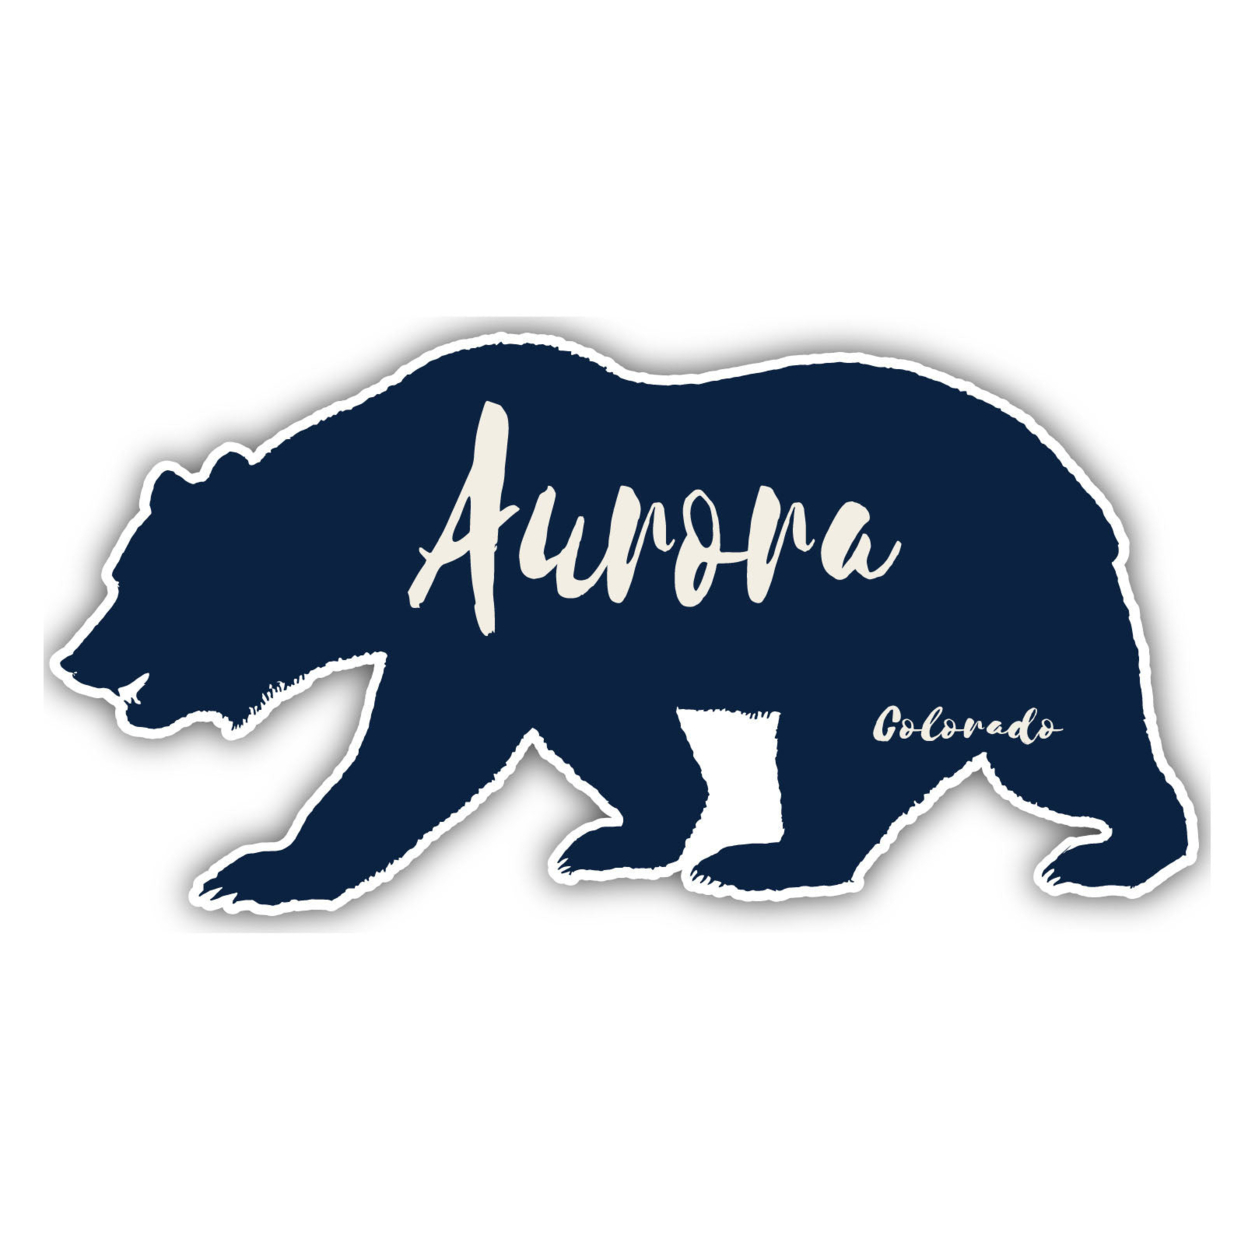 Aurora Colorado Souvenir Decorative Stickers (Choose Theme And Size) - 4-Pack, 12-Inch, Bear